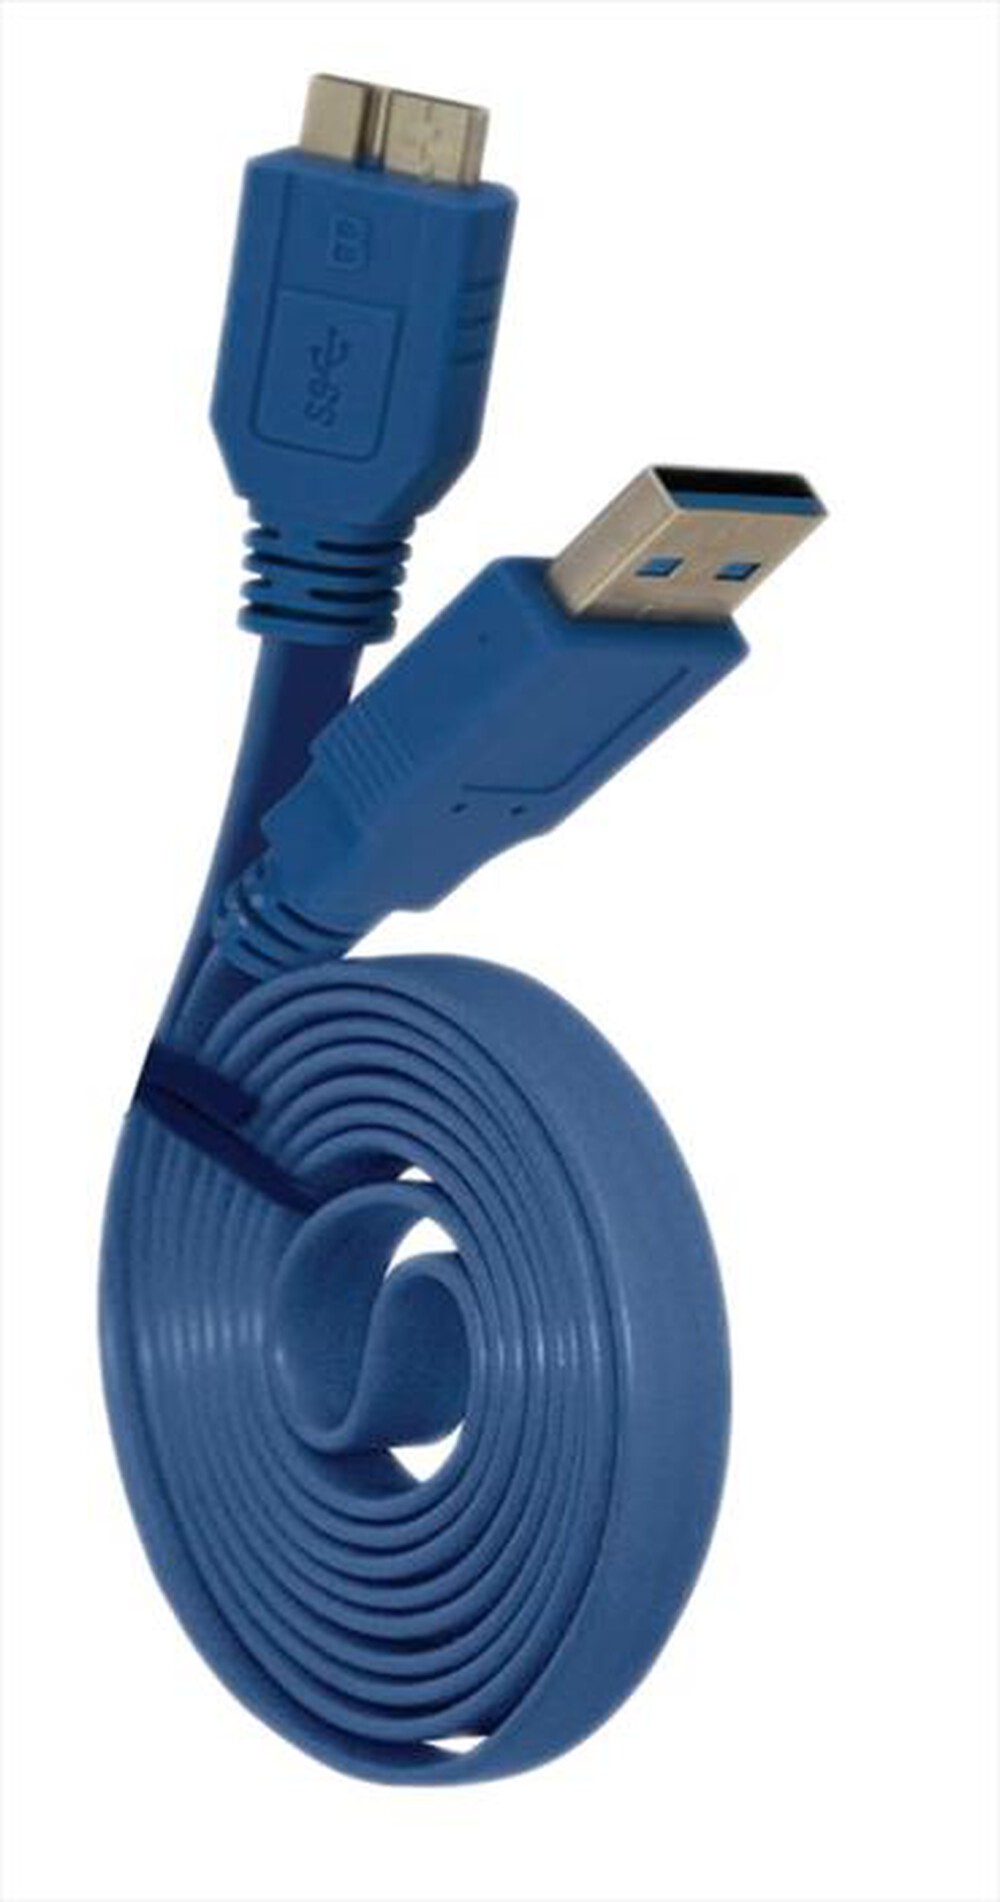 "XTREME - 40194 - Cavo da USB to MicroUSB"